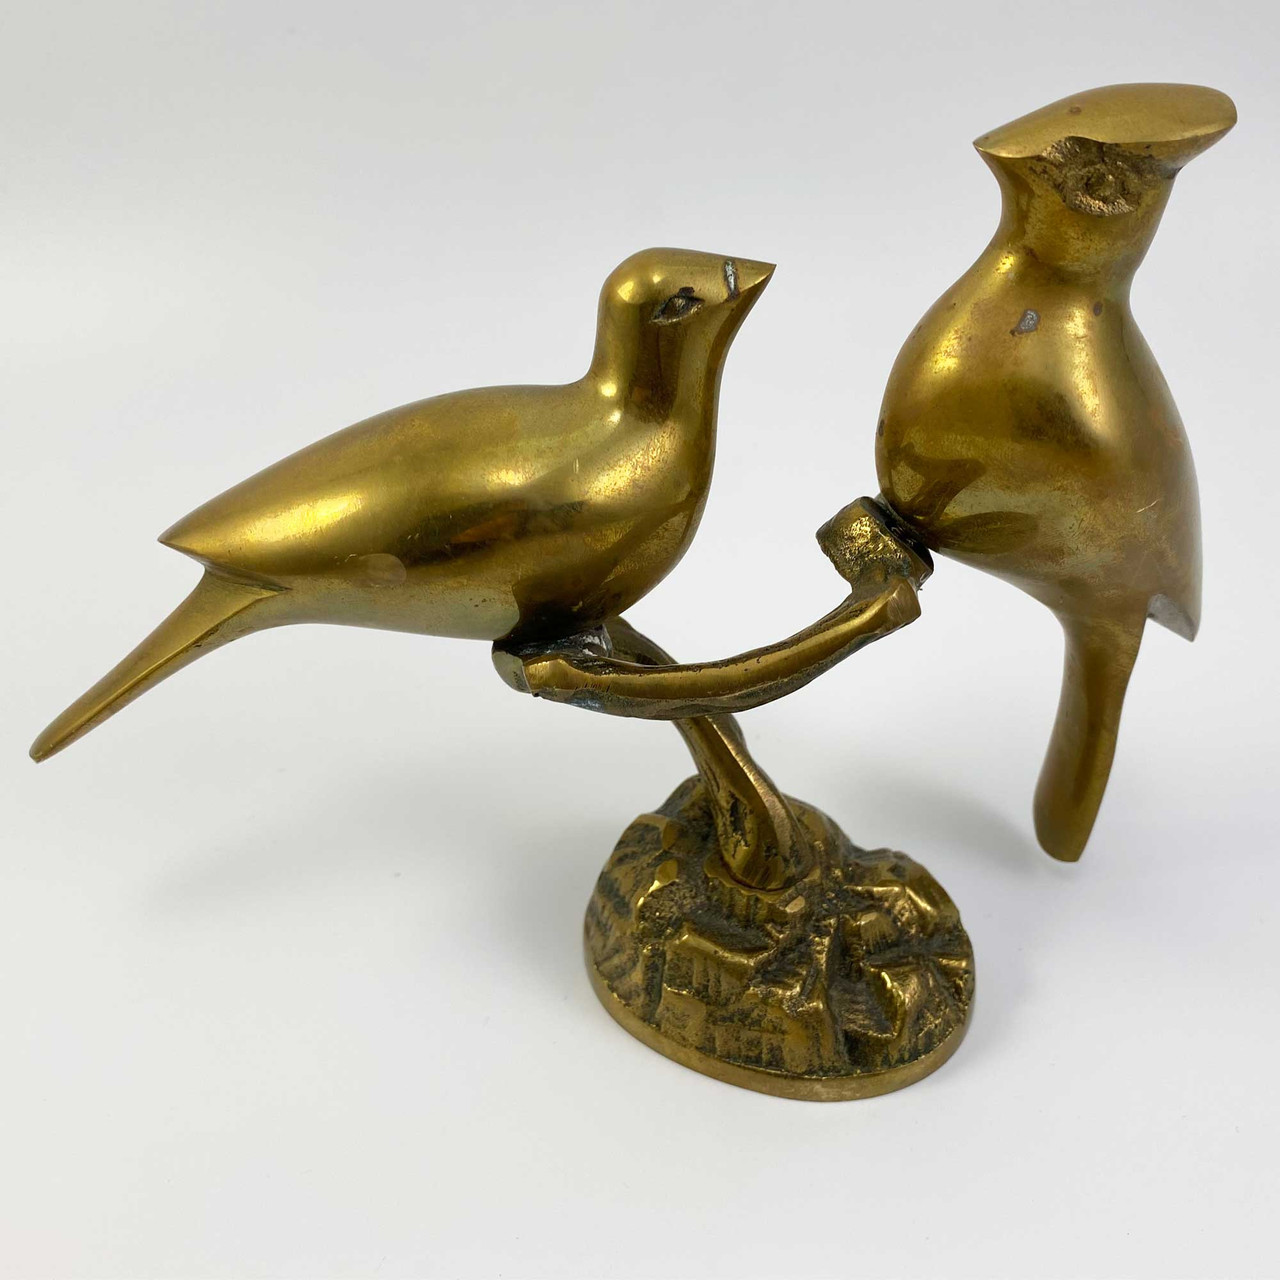 Small vintage brass figure of a bird - Retro Studio